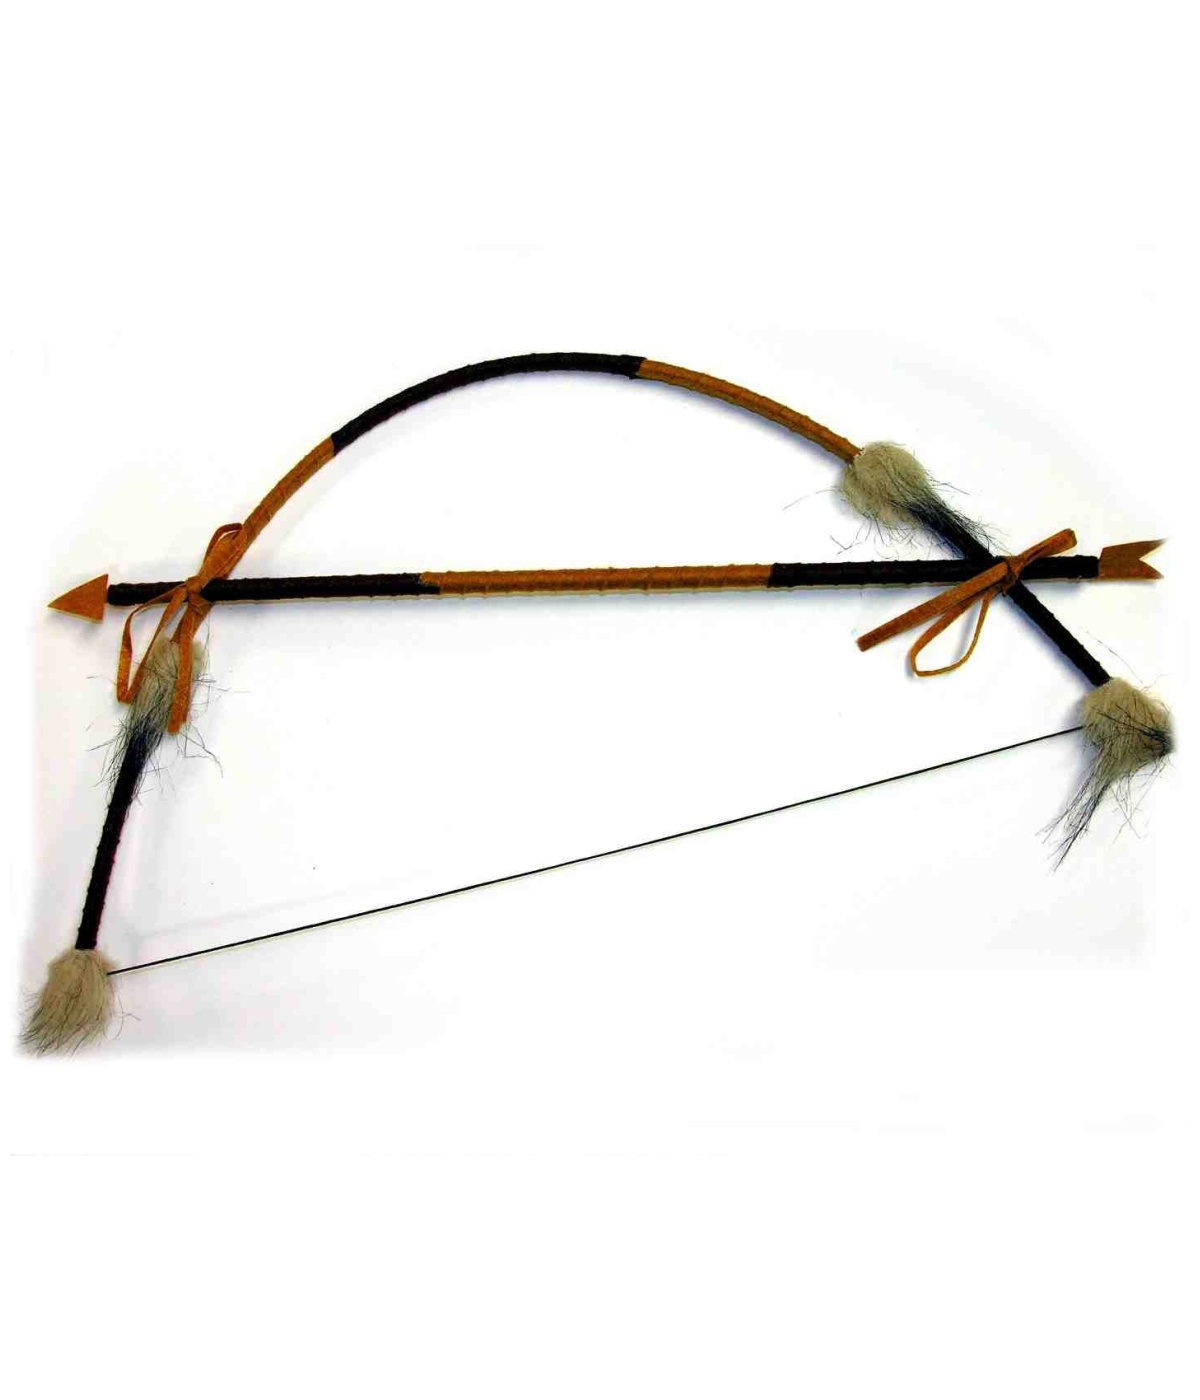  Native American Bow Arrow